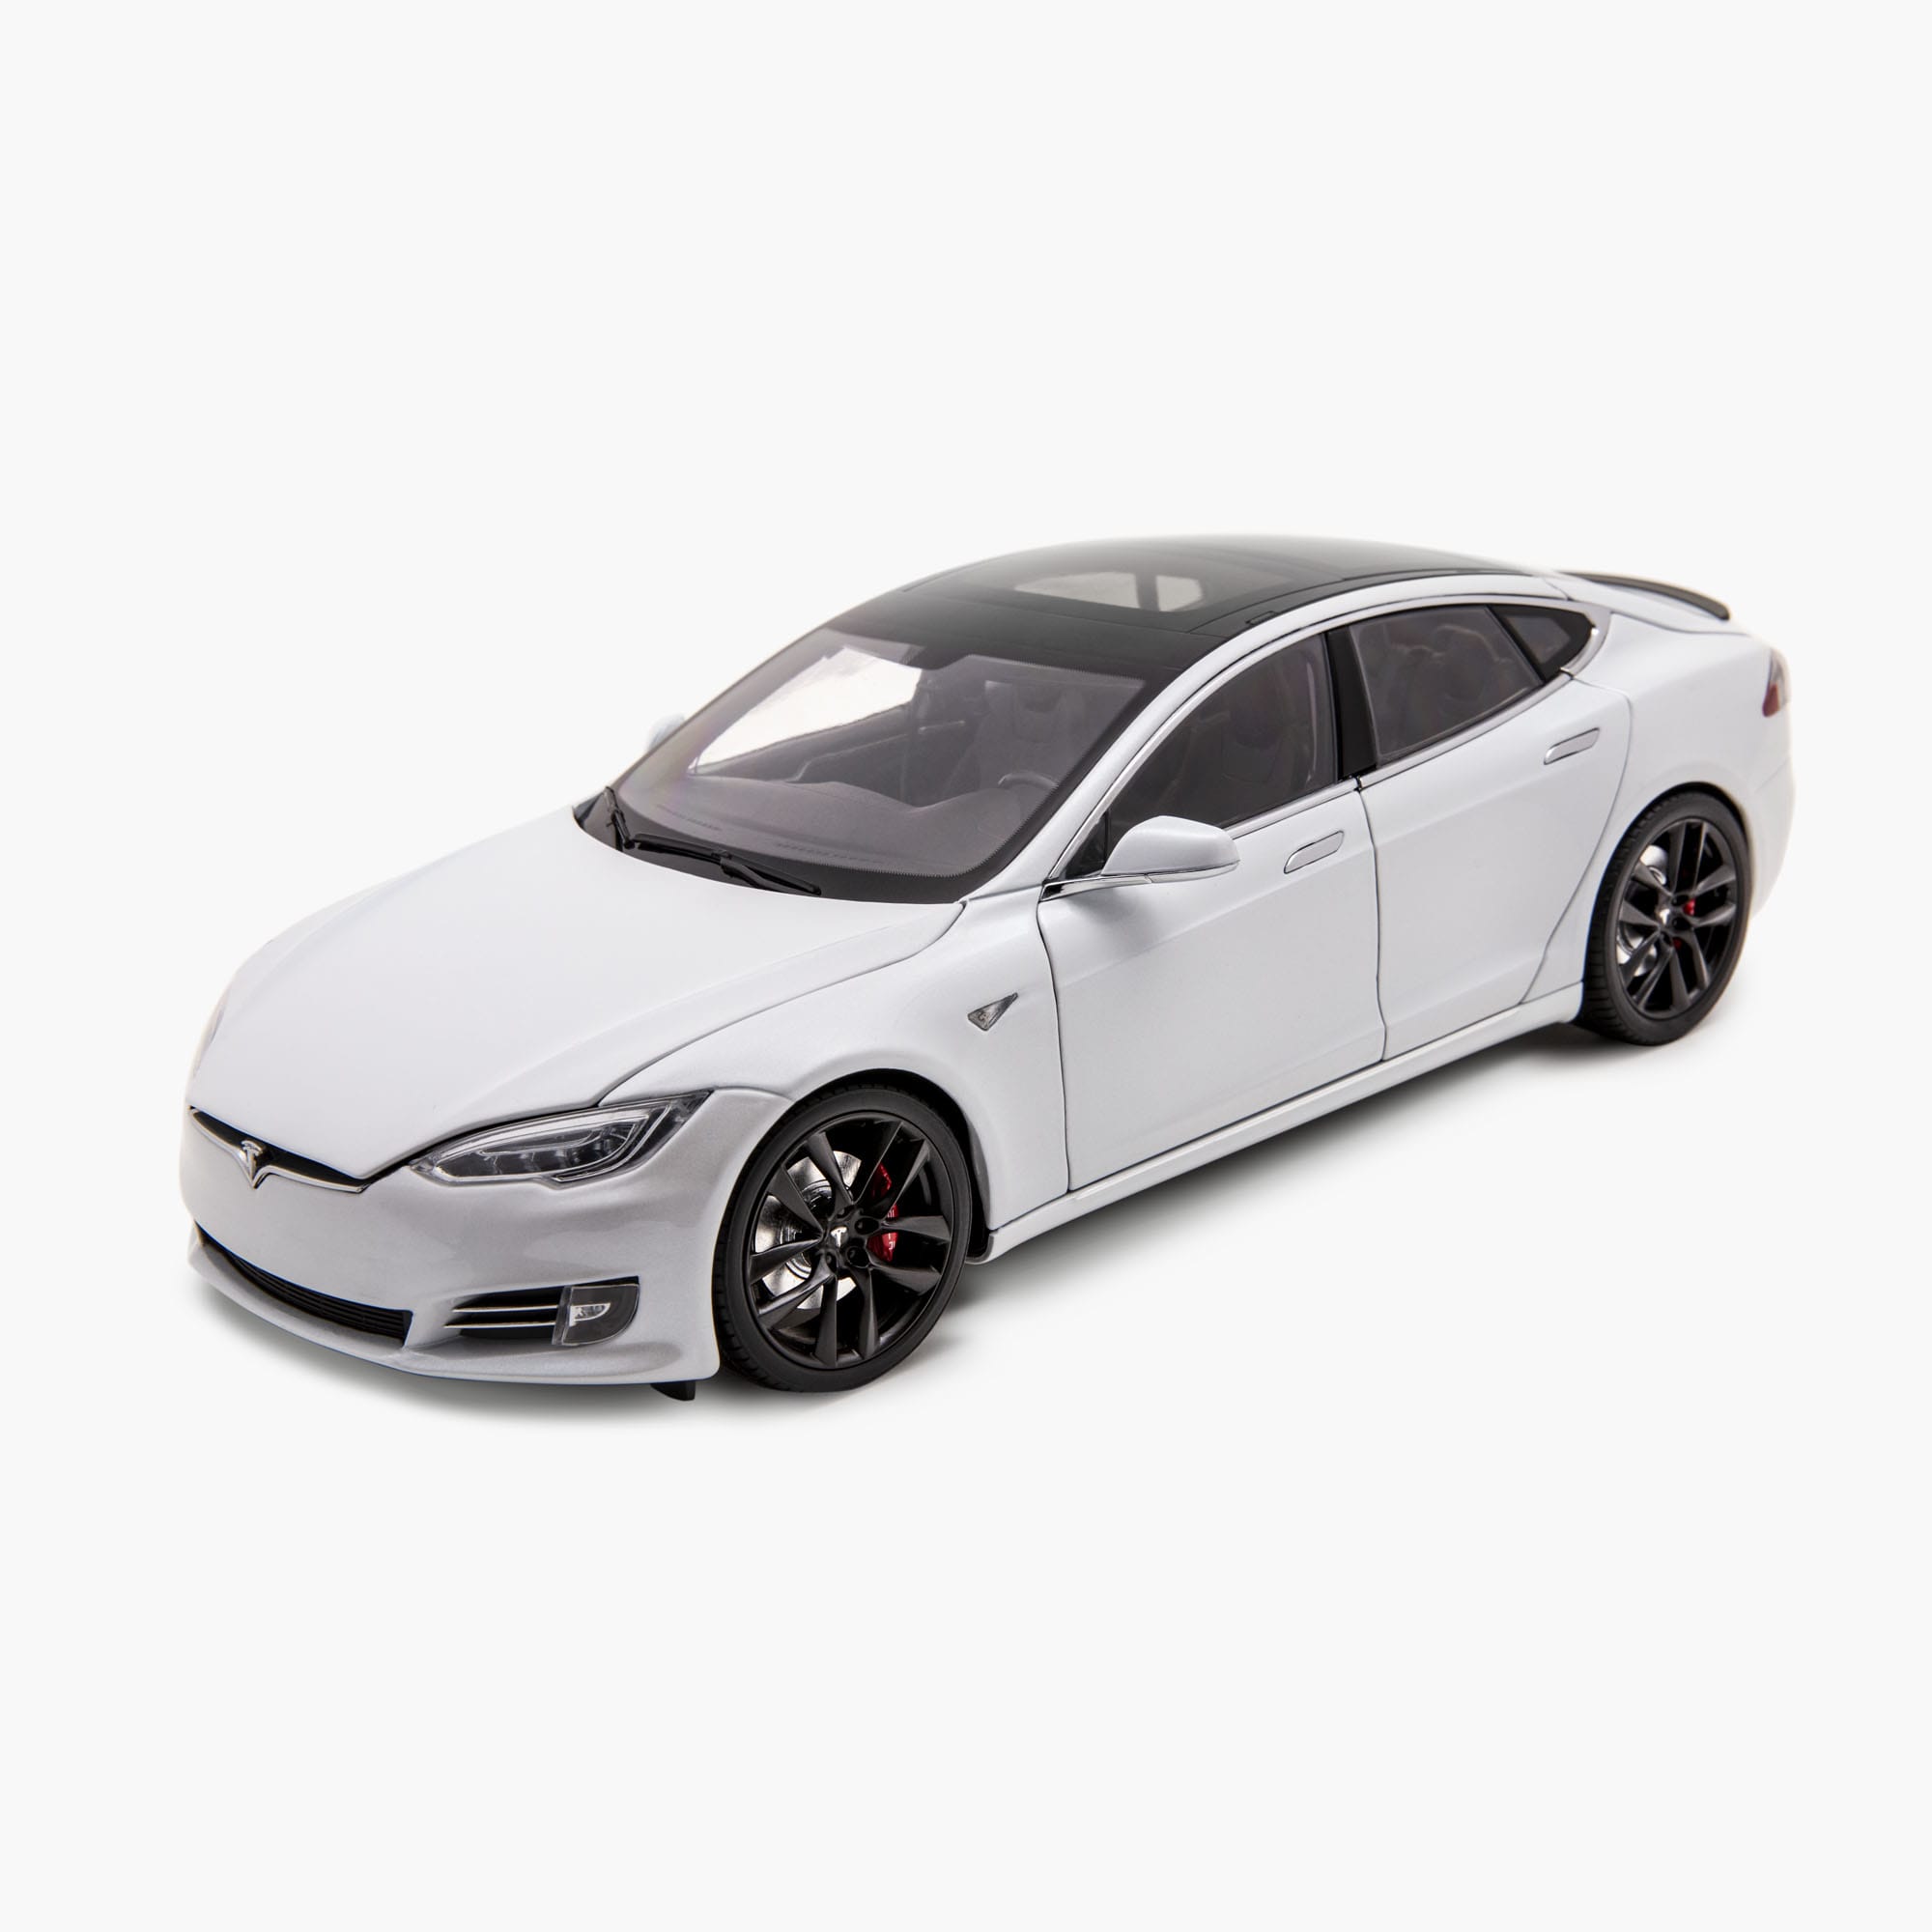 Maqueta de metal fundido a escala 1:18 del Model S